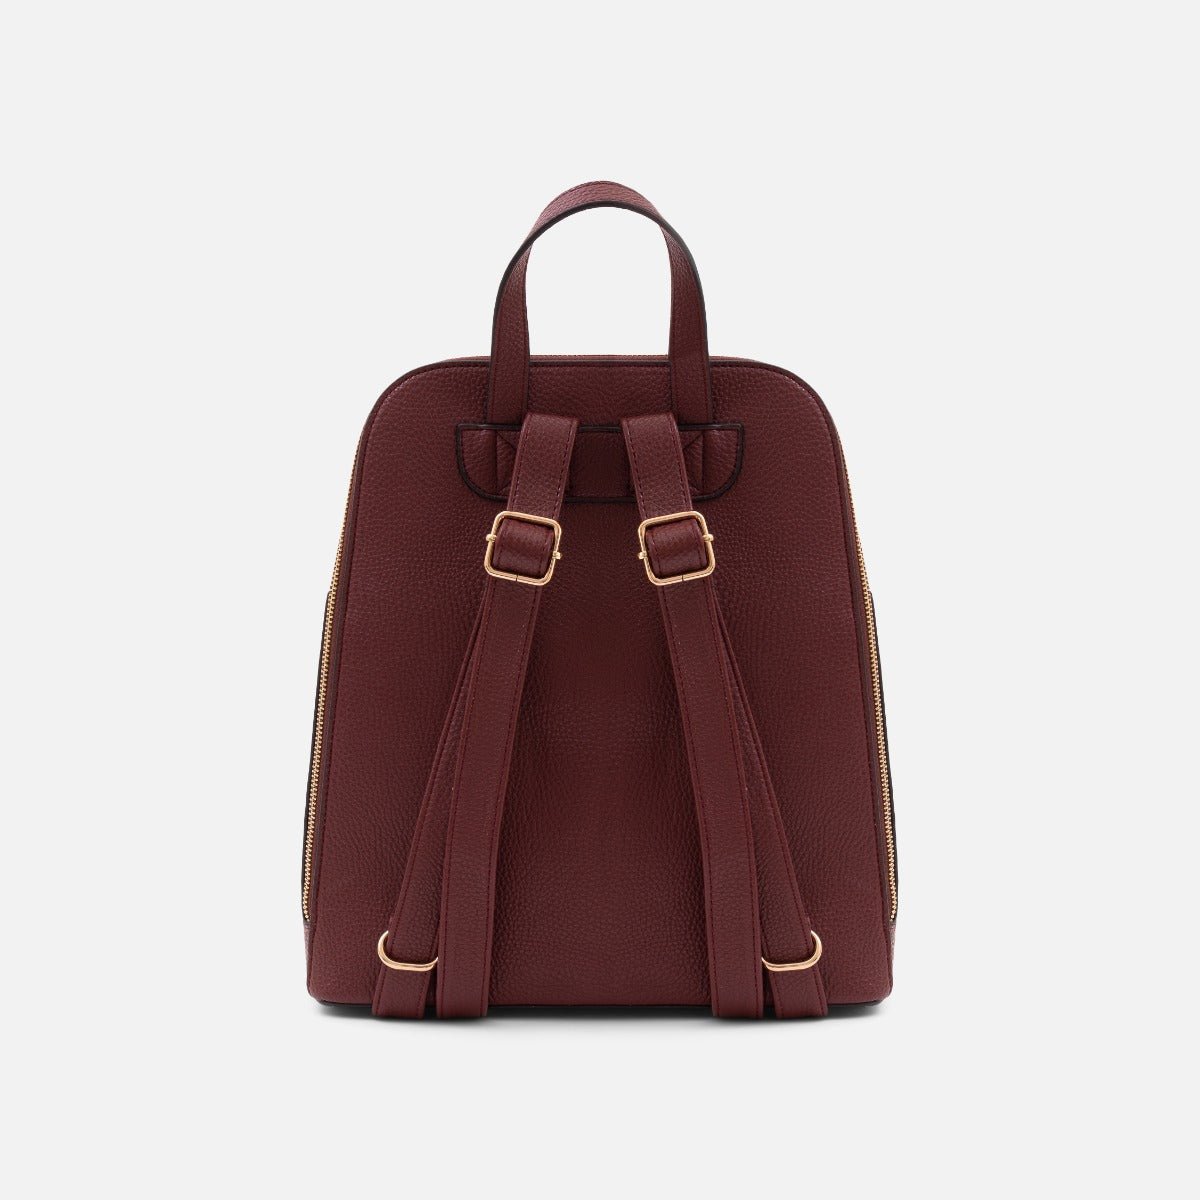 Burgundy leatherette backpack with front pocket